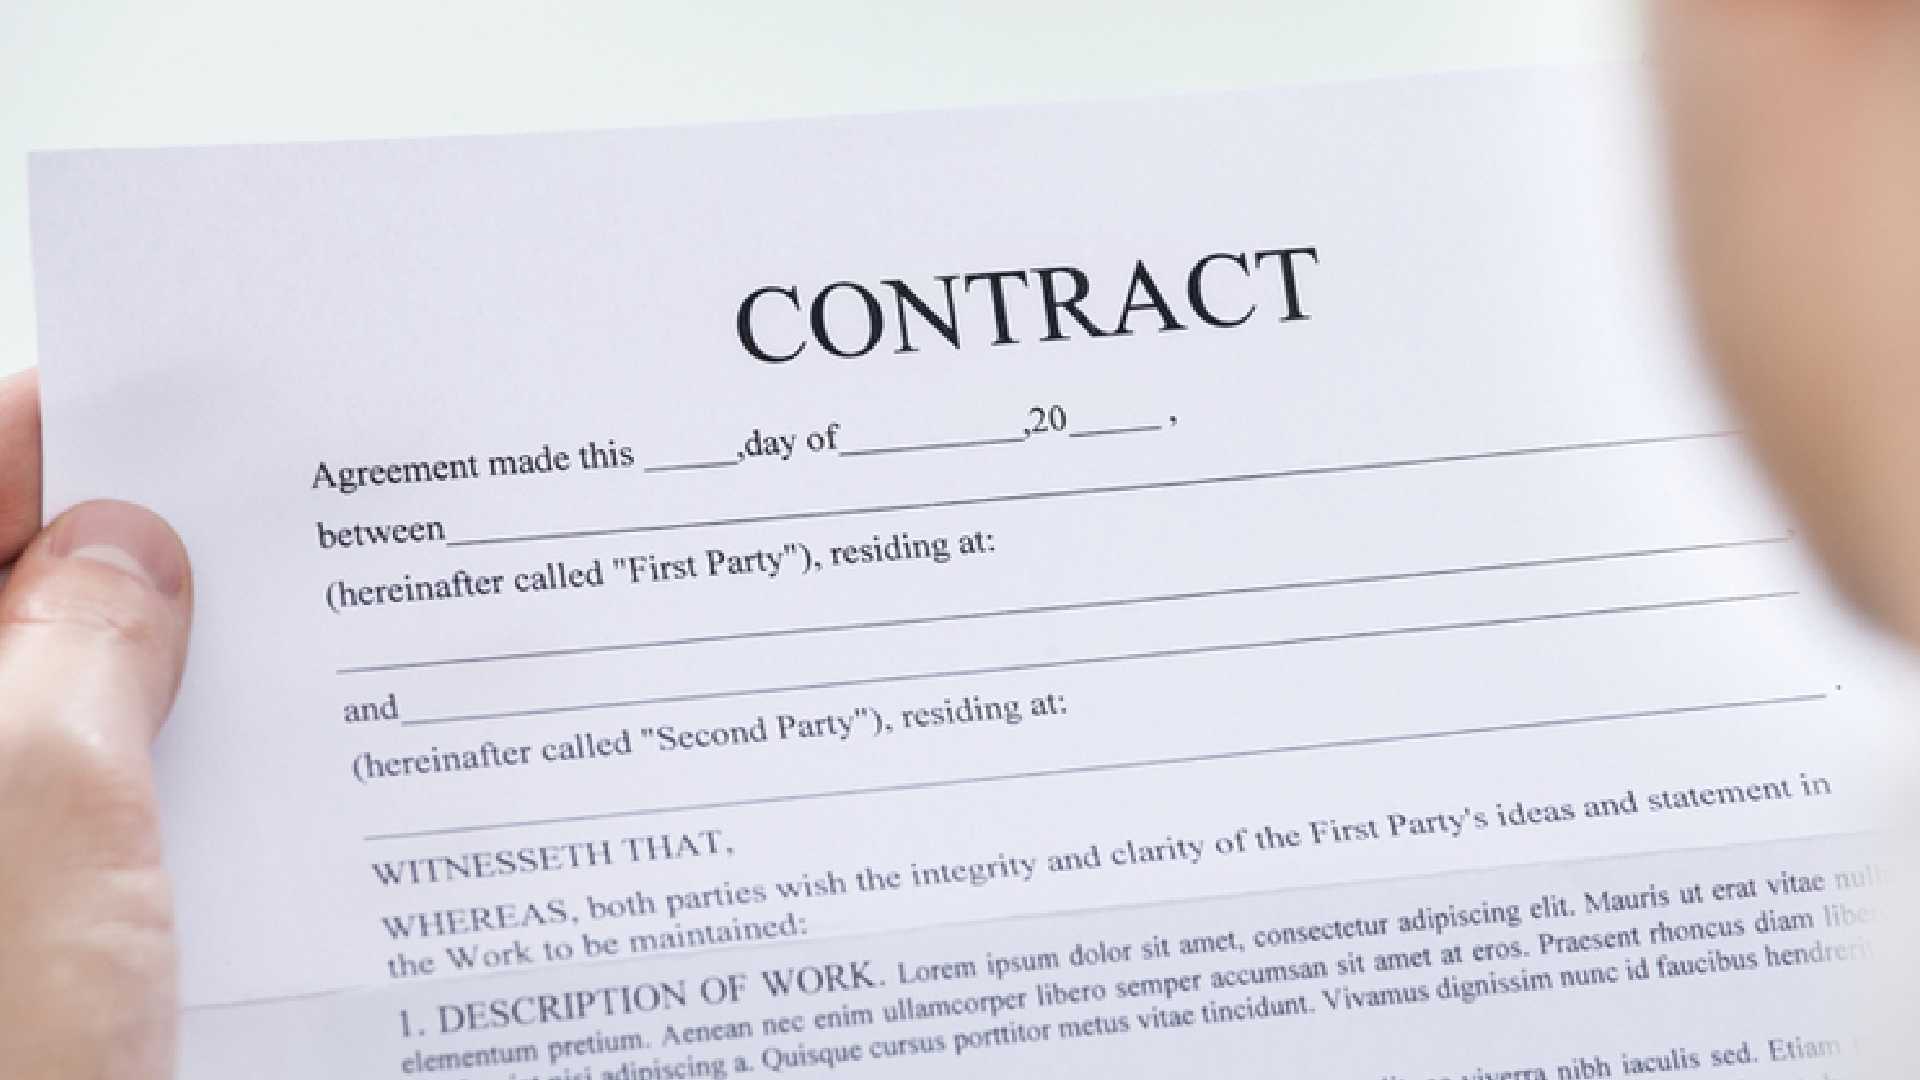 employment contract UAE